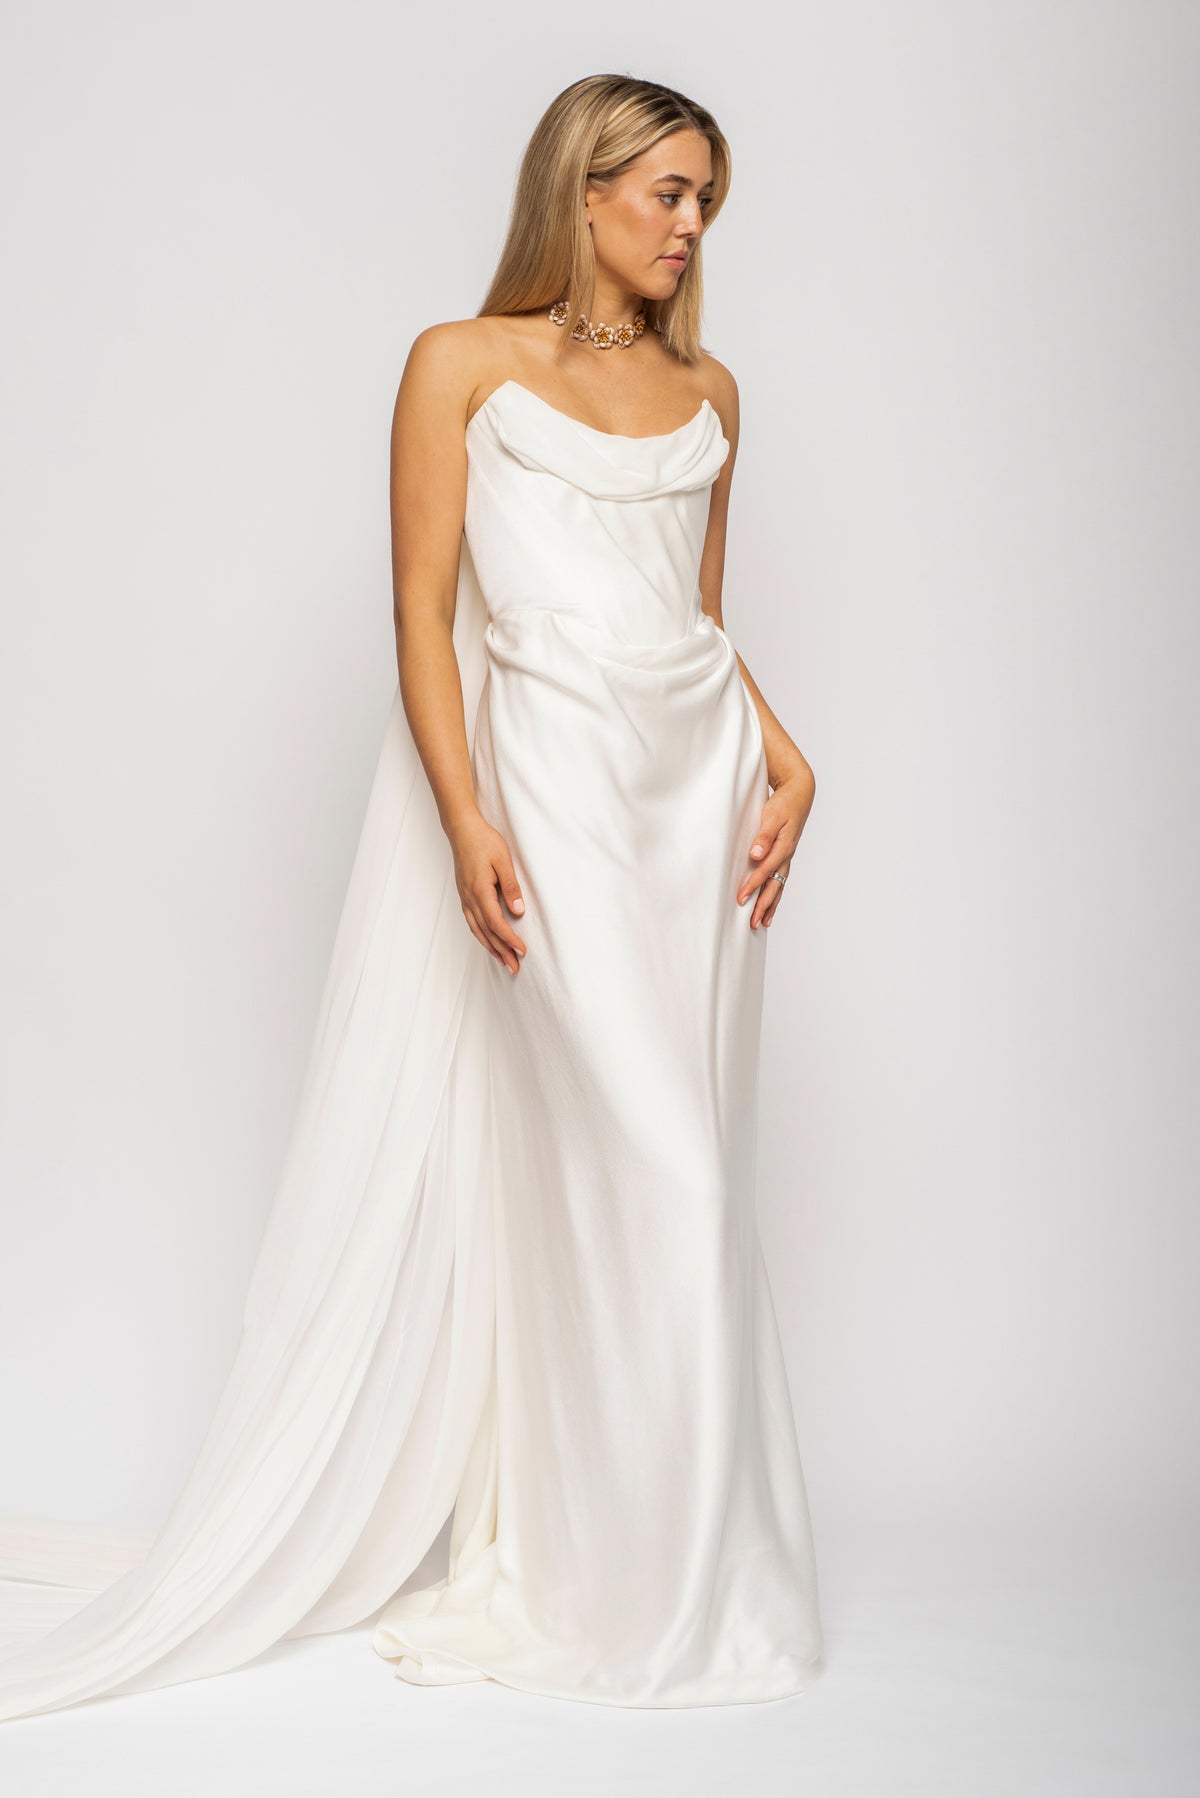 Vivienne Westwood Galaxy Cape Wedding Gown